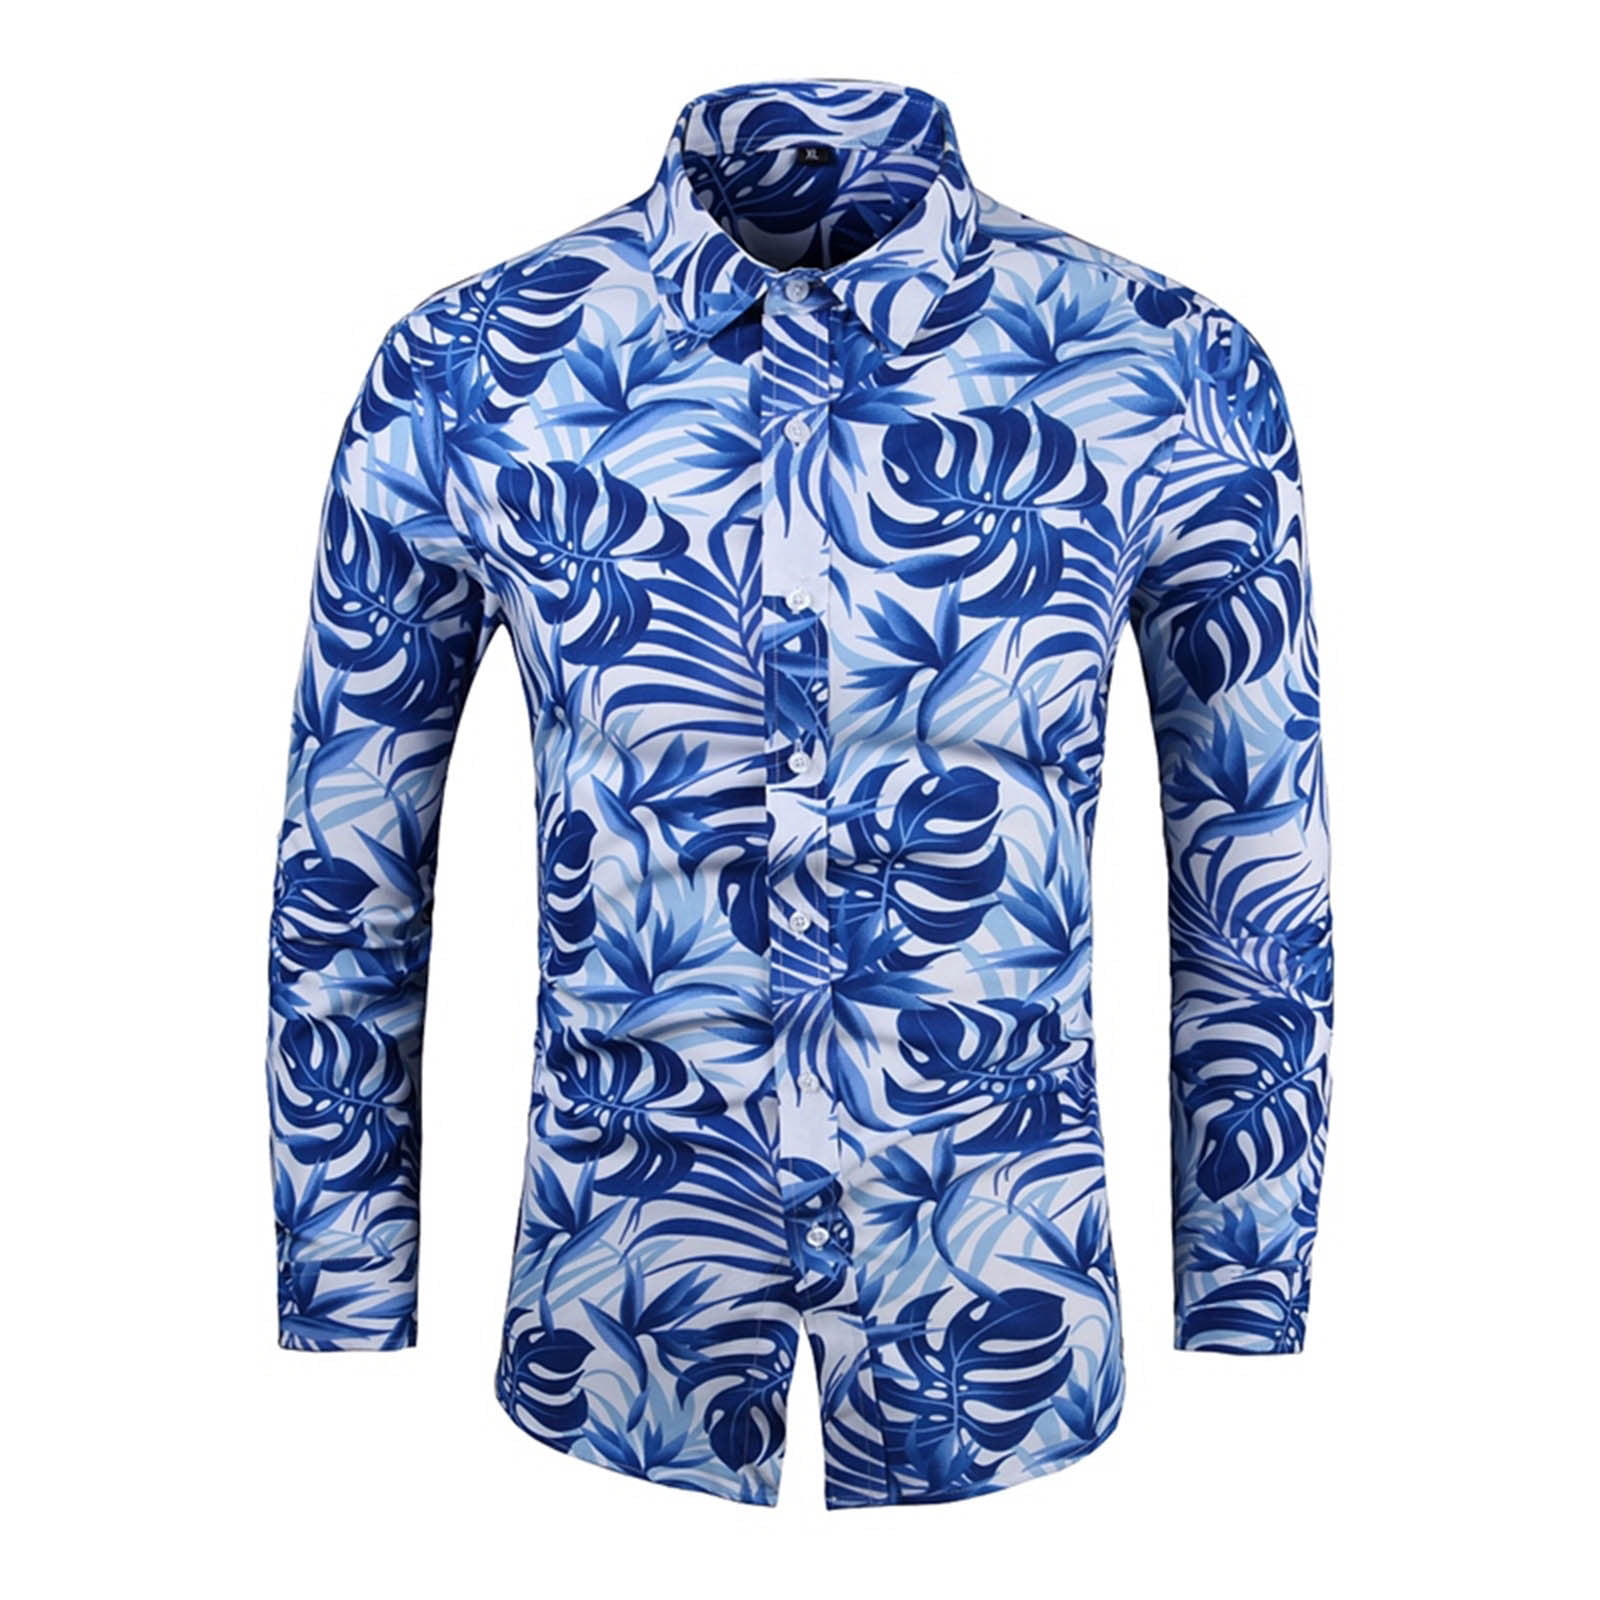 Hfyihgf Men Floral Slim Fit Dress Shirts Long Sleeve Casual Button Down Flower  Printed Club Party Shirts(Sky Blue,5XL) 